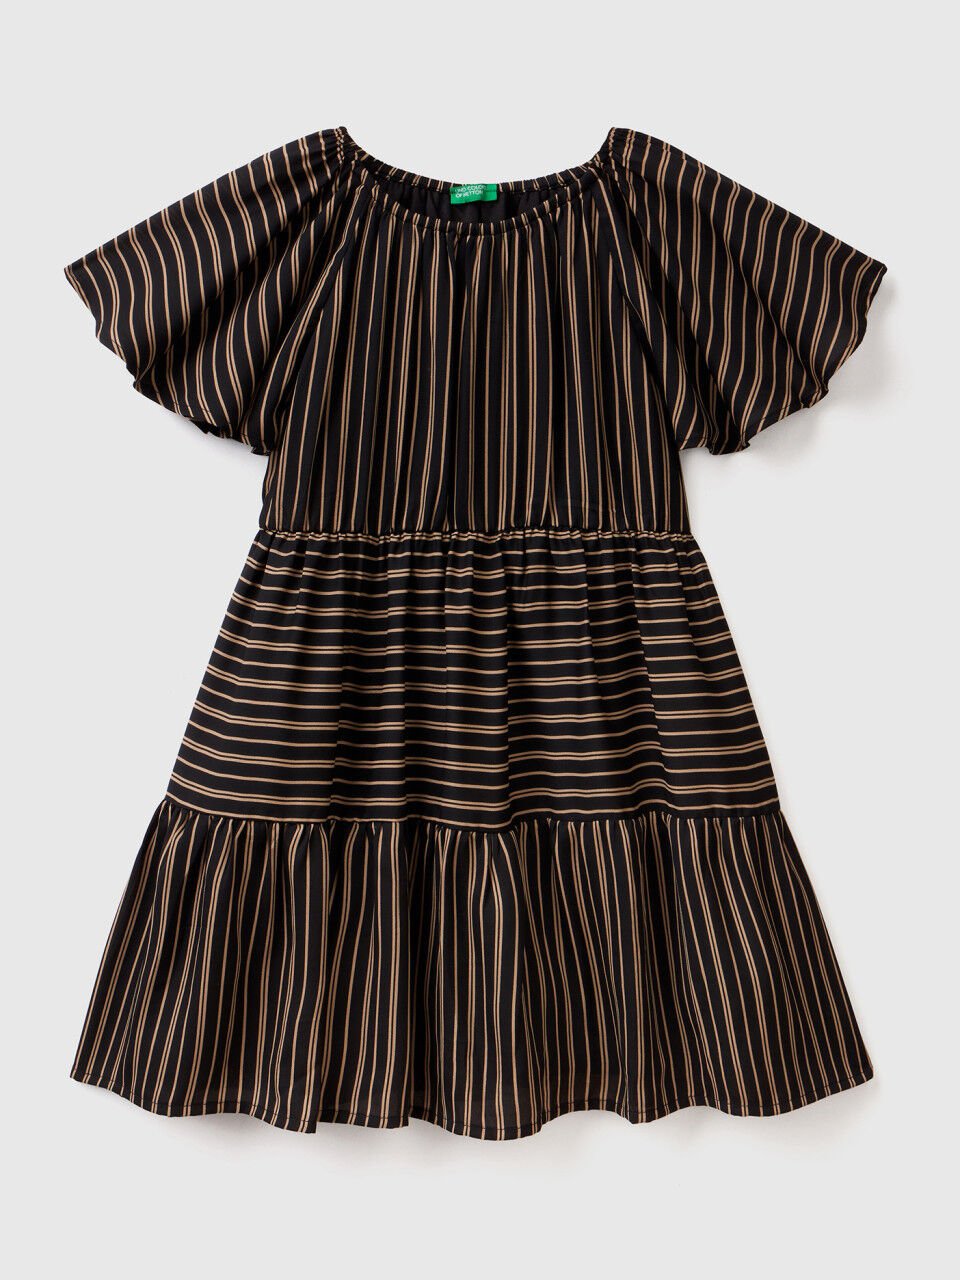 Striped dress with flounces